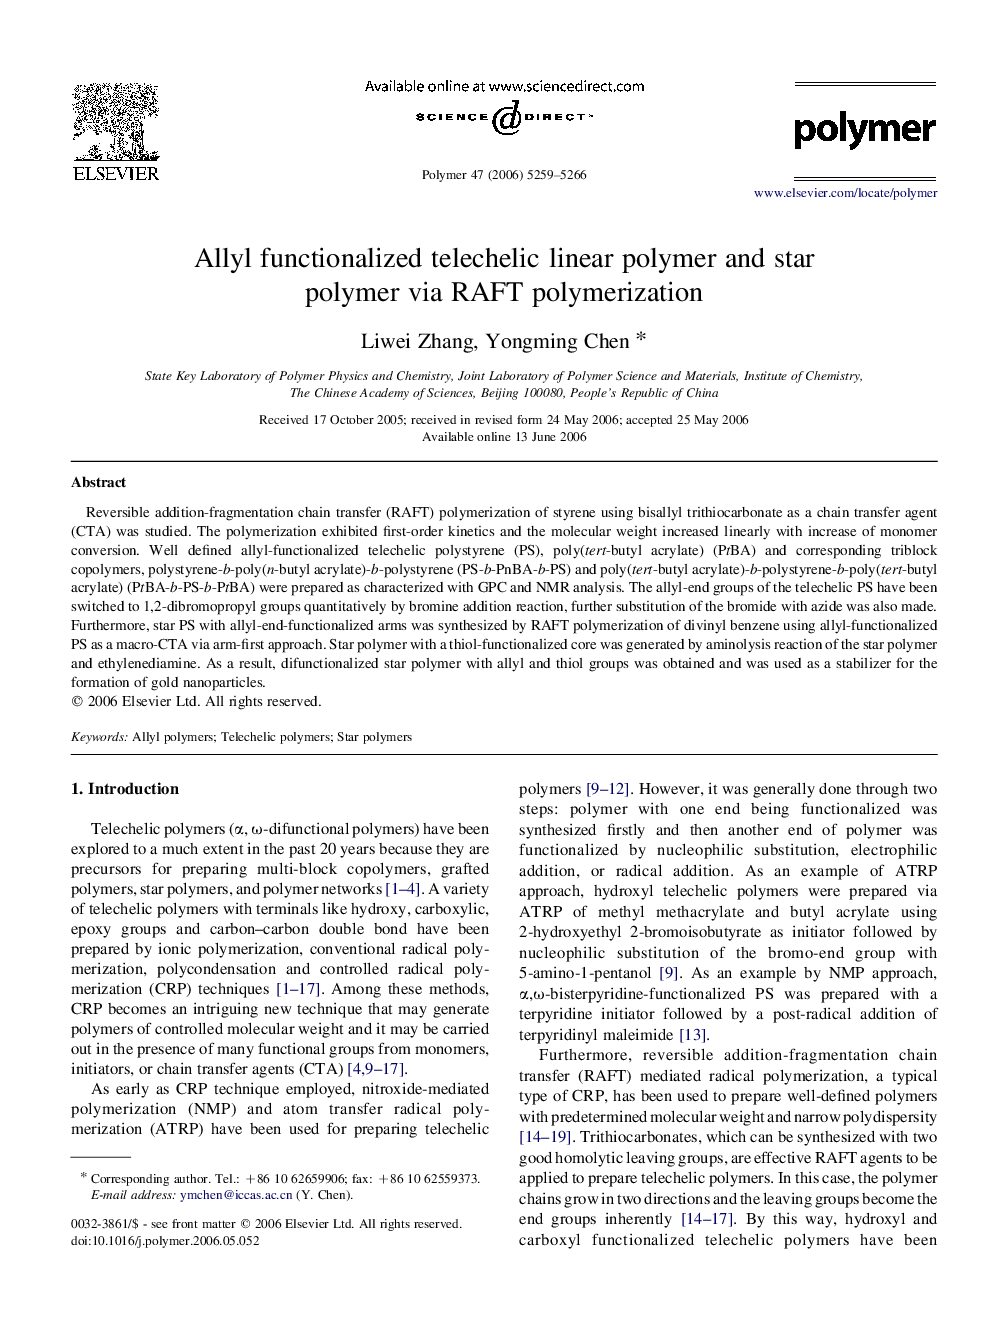 Allyl functionalized telechelic linear polymer and star polymer via RAFT polymerization